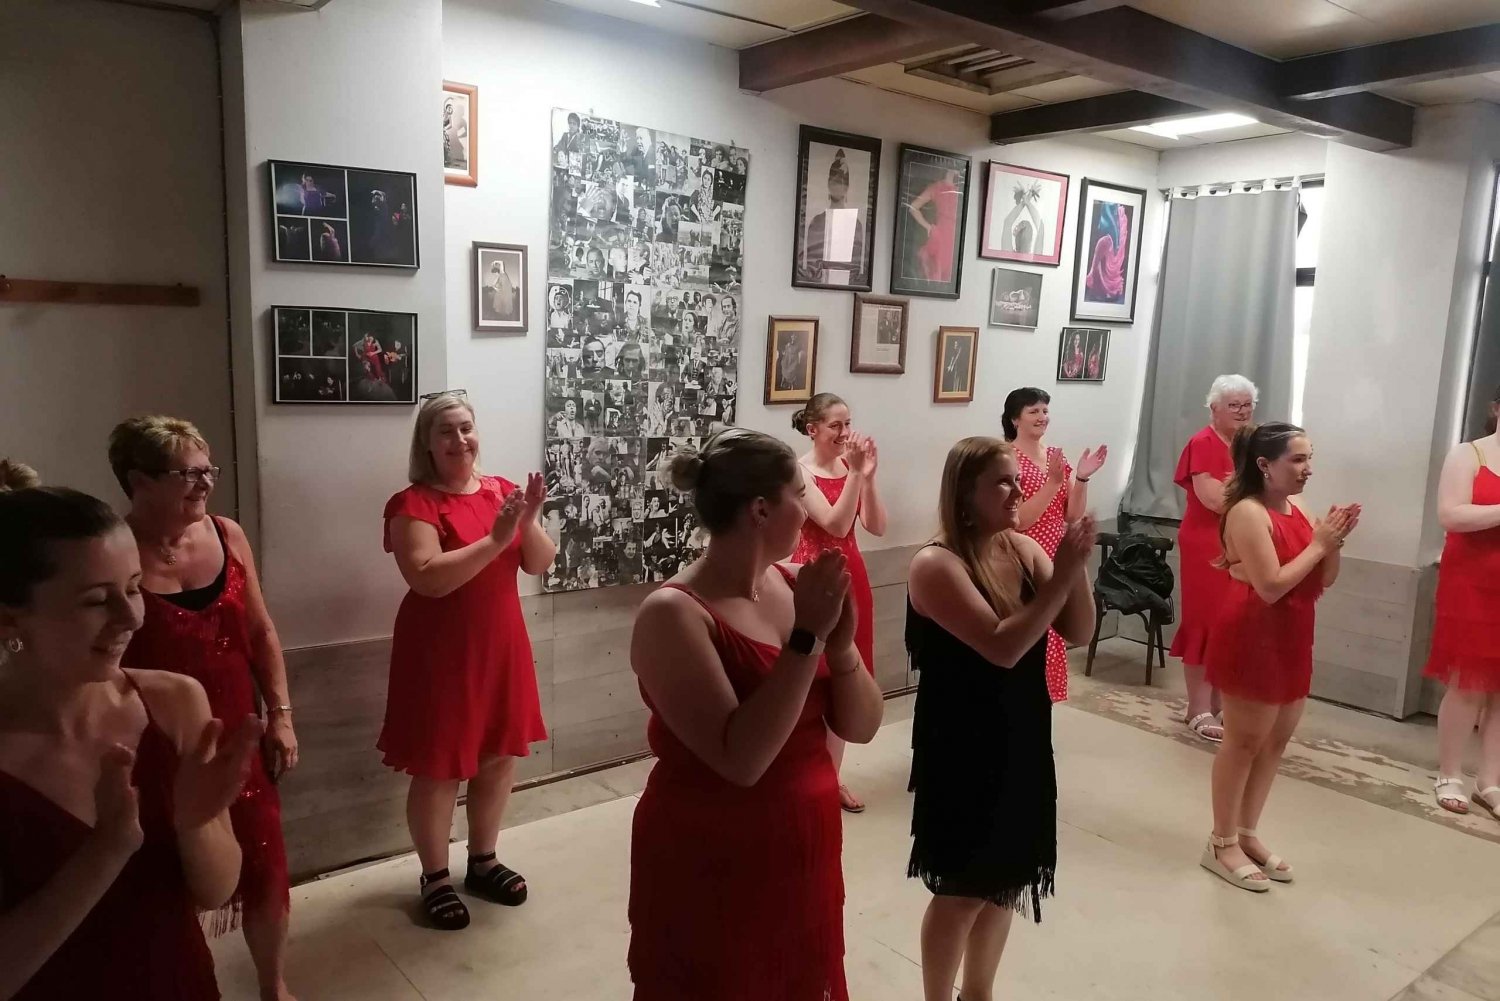 Clase de Baile Latino y Salsa en Málaga Experience